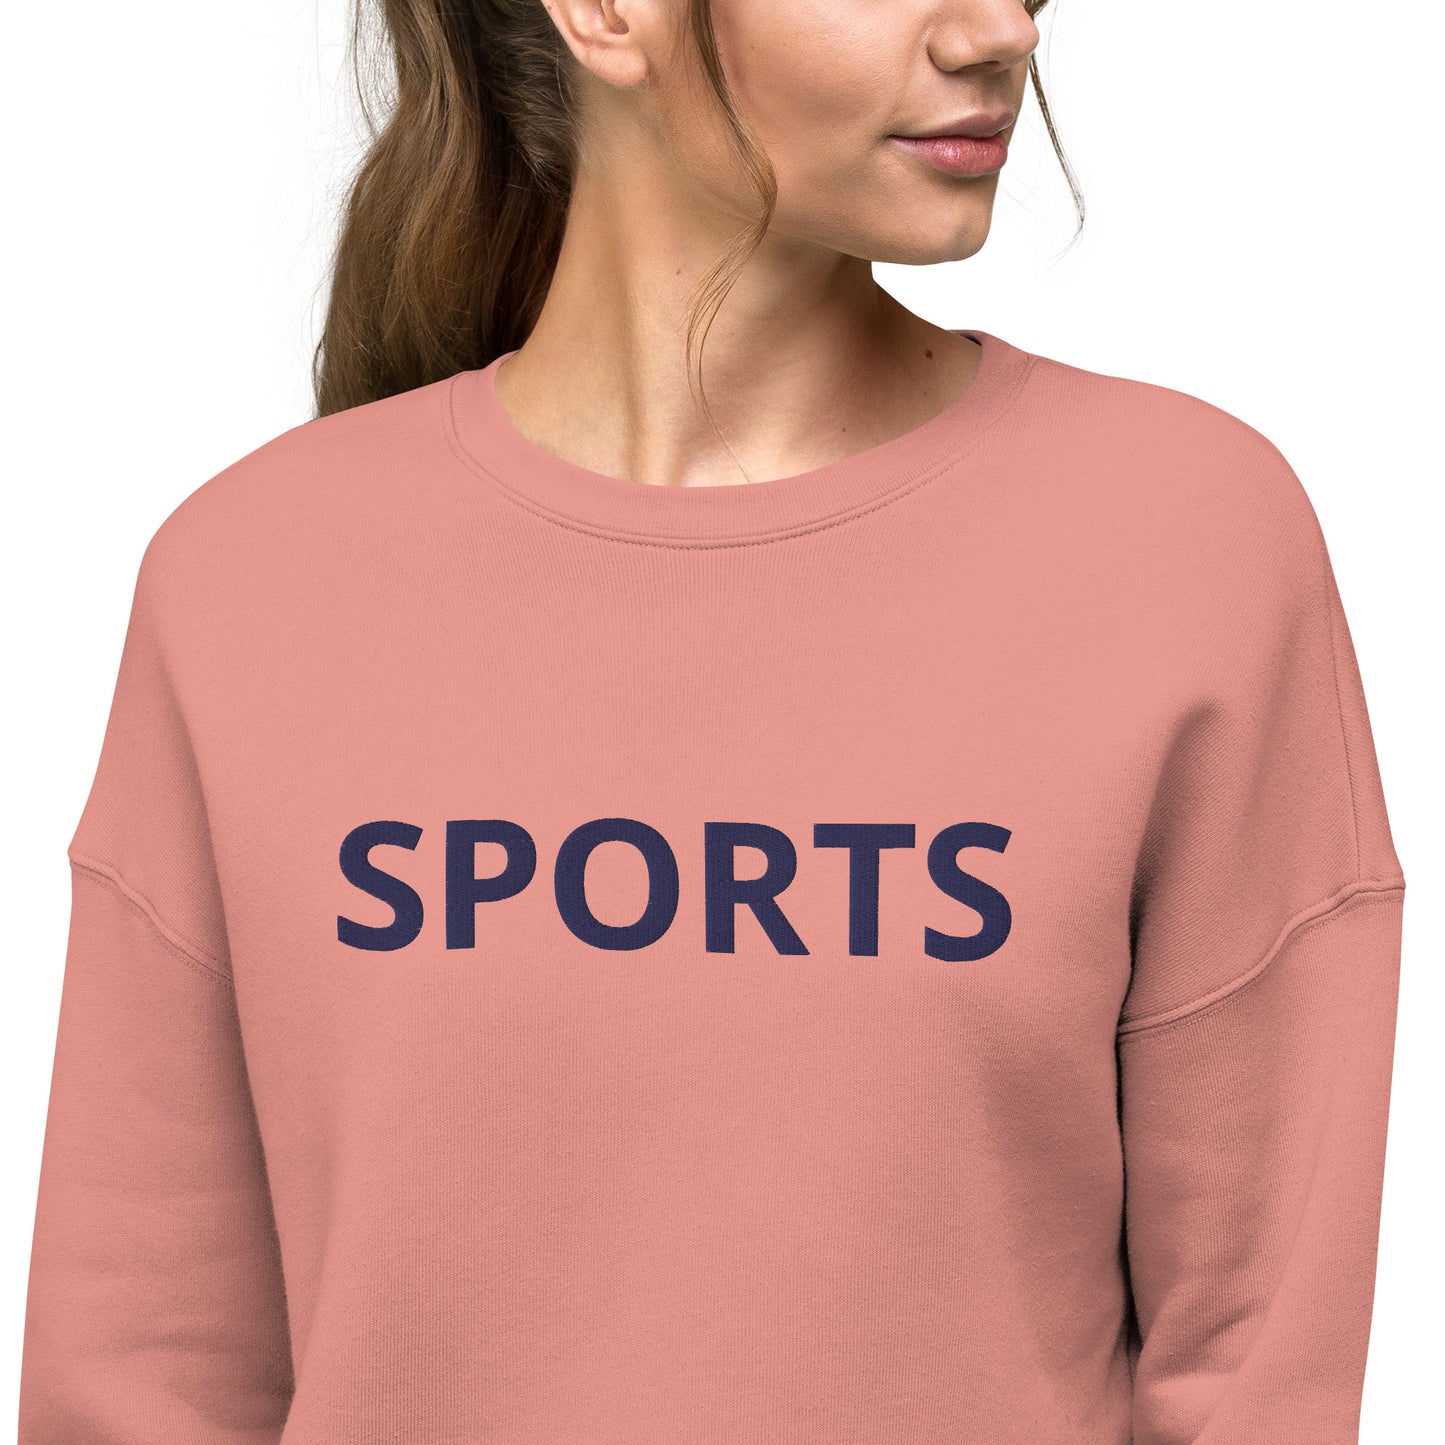 Sports Cropped Sweatshirt